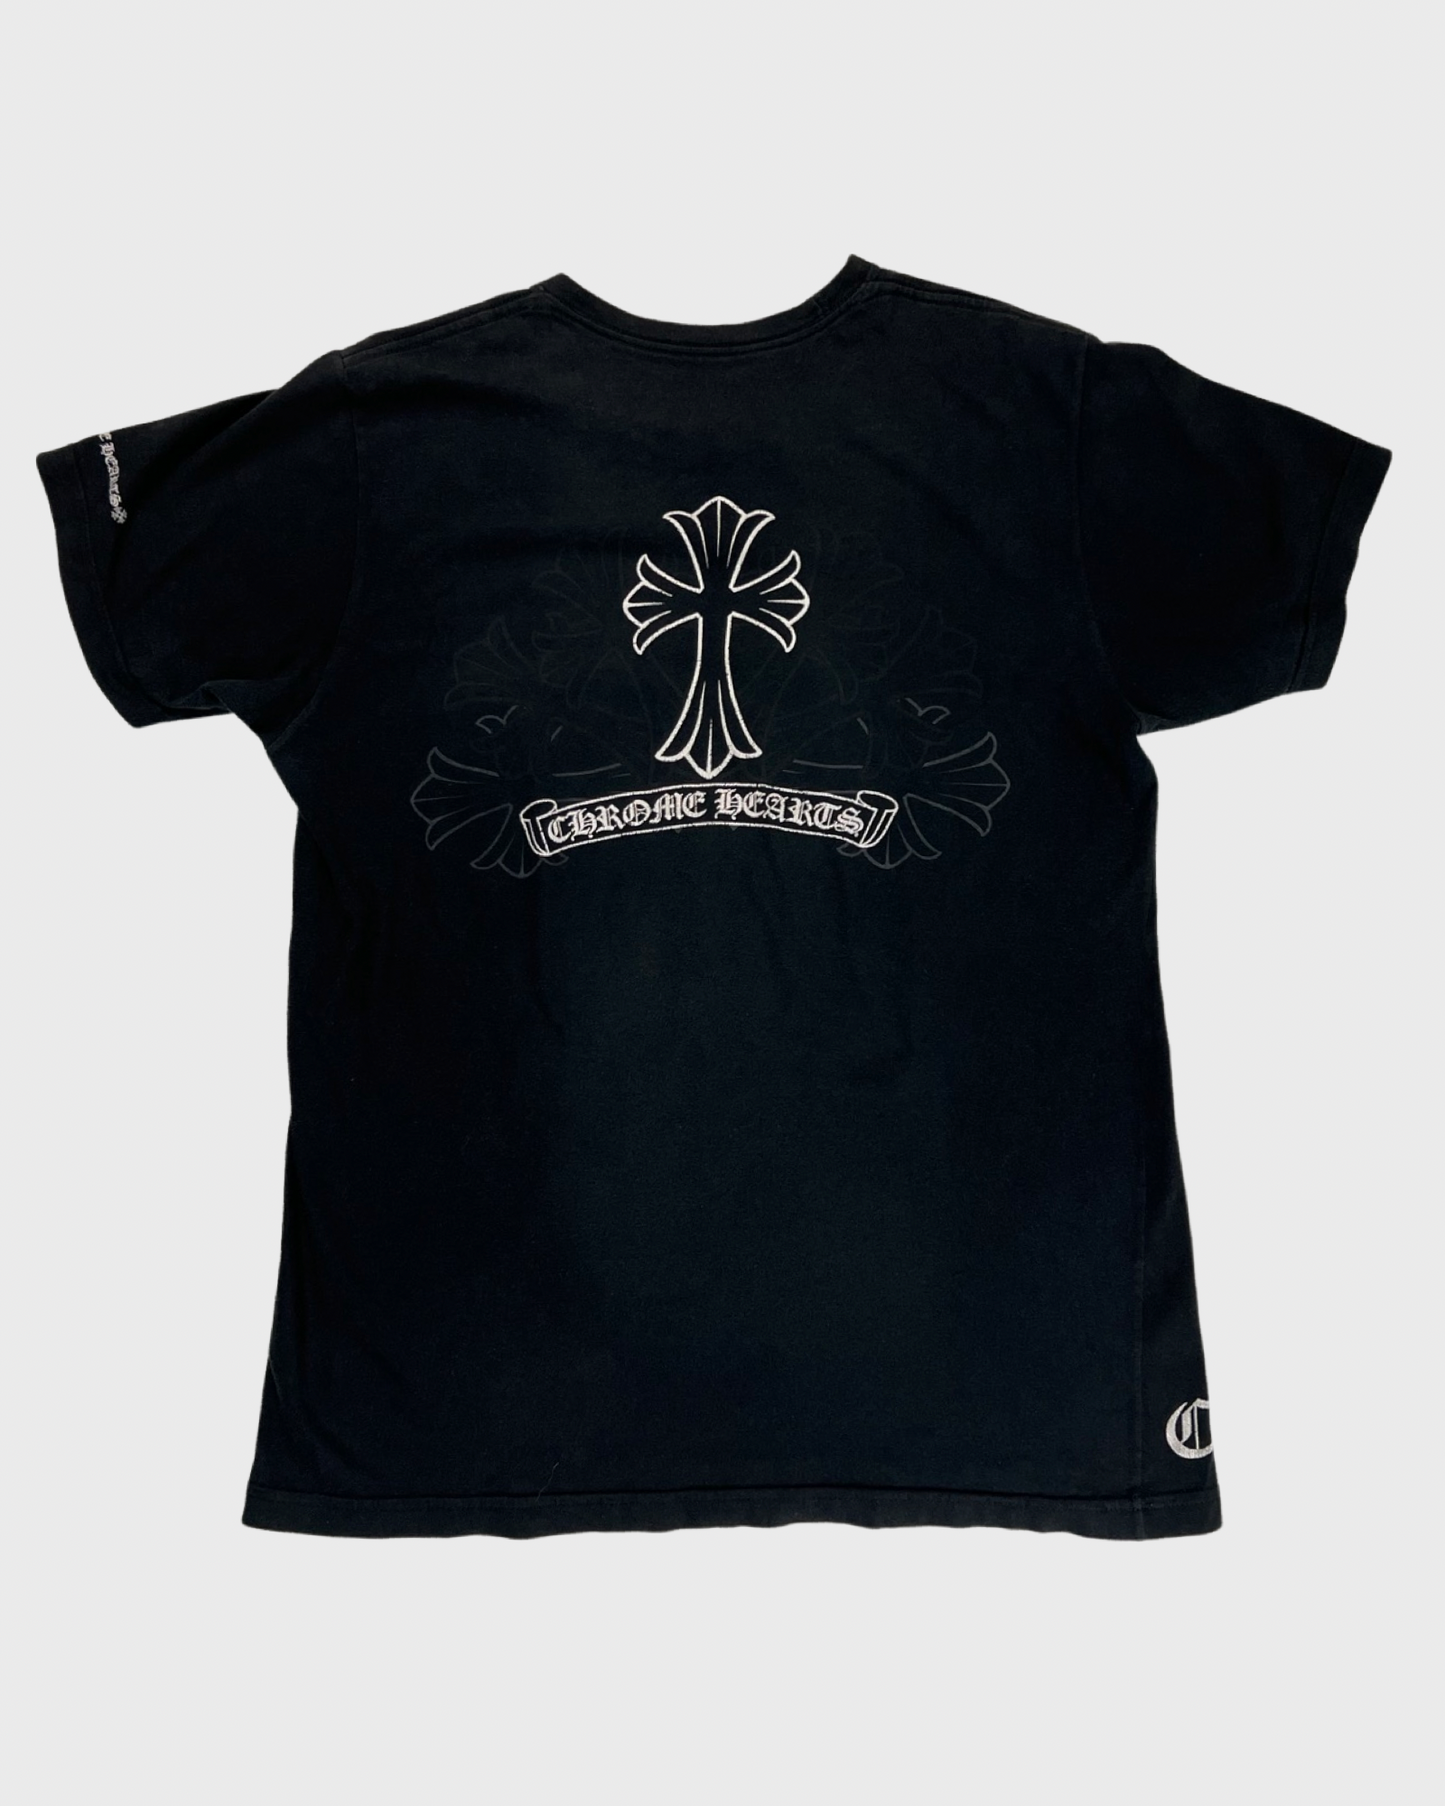 Chrome Hearts Cemetery Cross Tee T-Shirt SZ:M